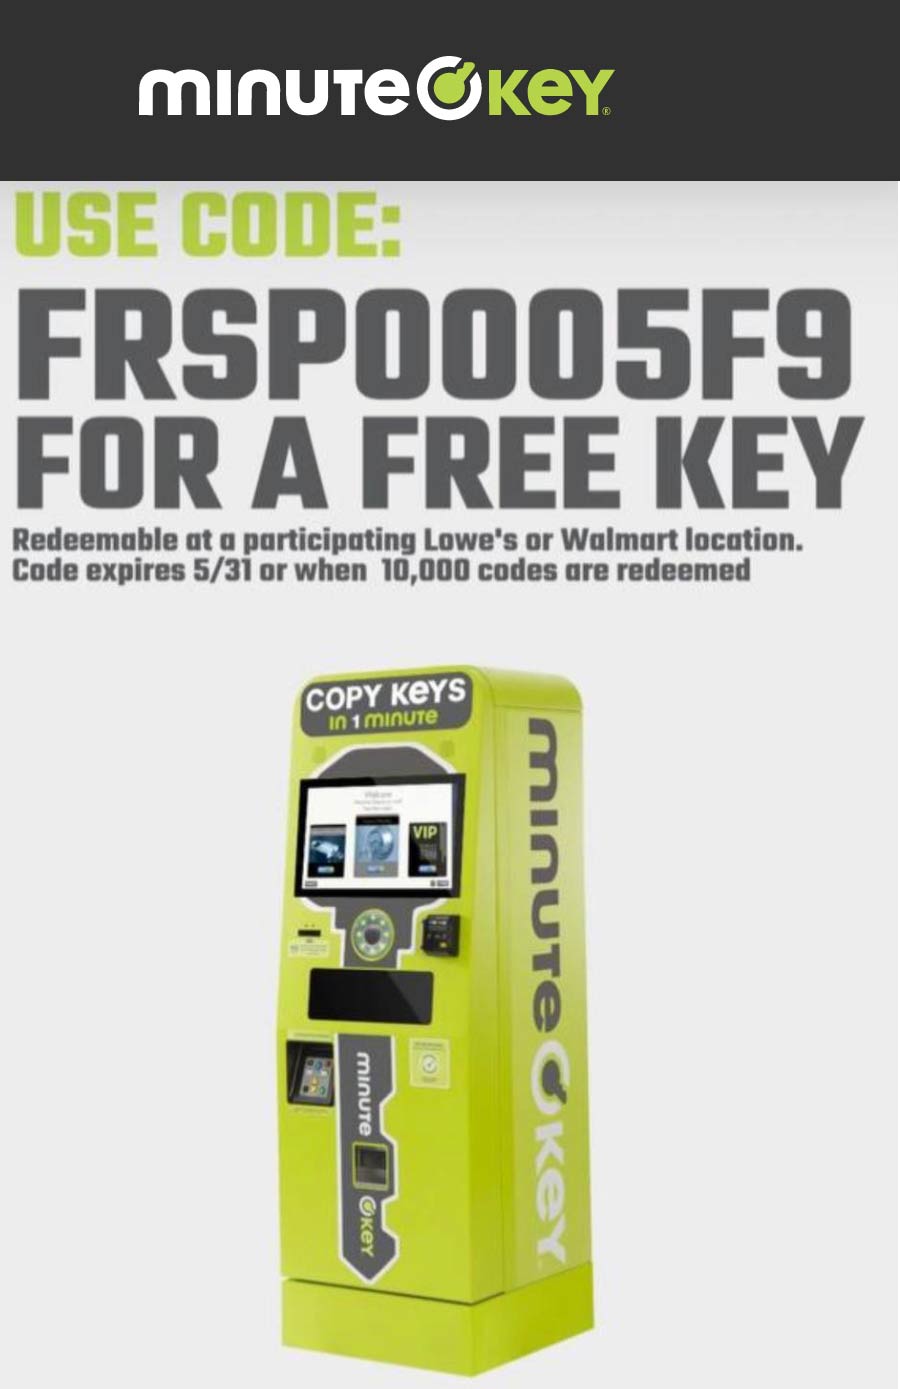 Minute Key stores Coupon  Free key at various Minute Key kiosks via promo code FRSP0005F9 #minutekey 